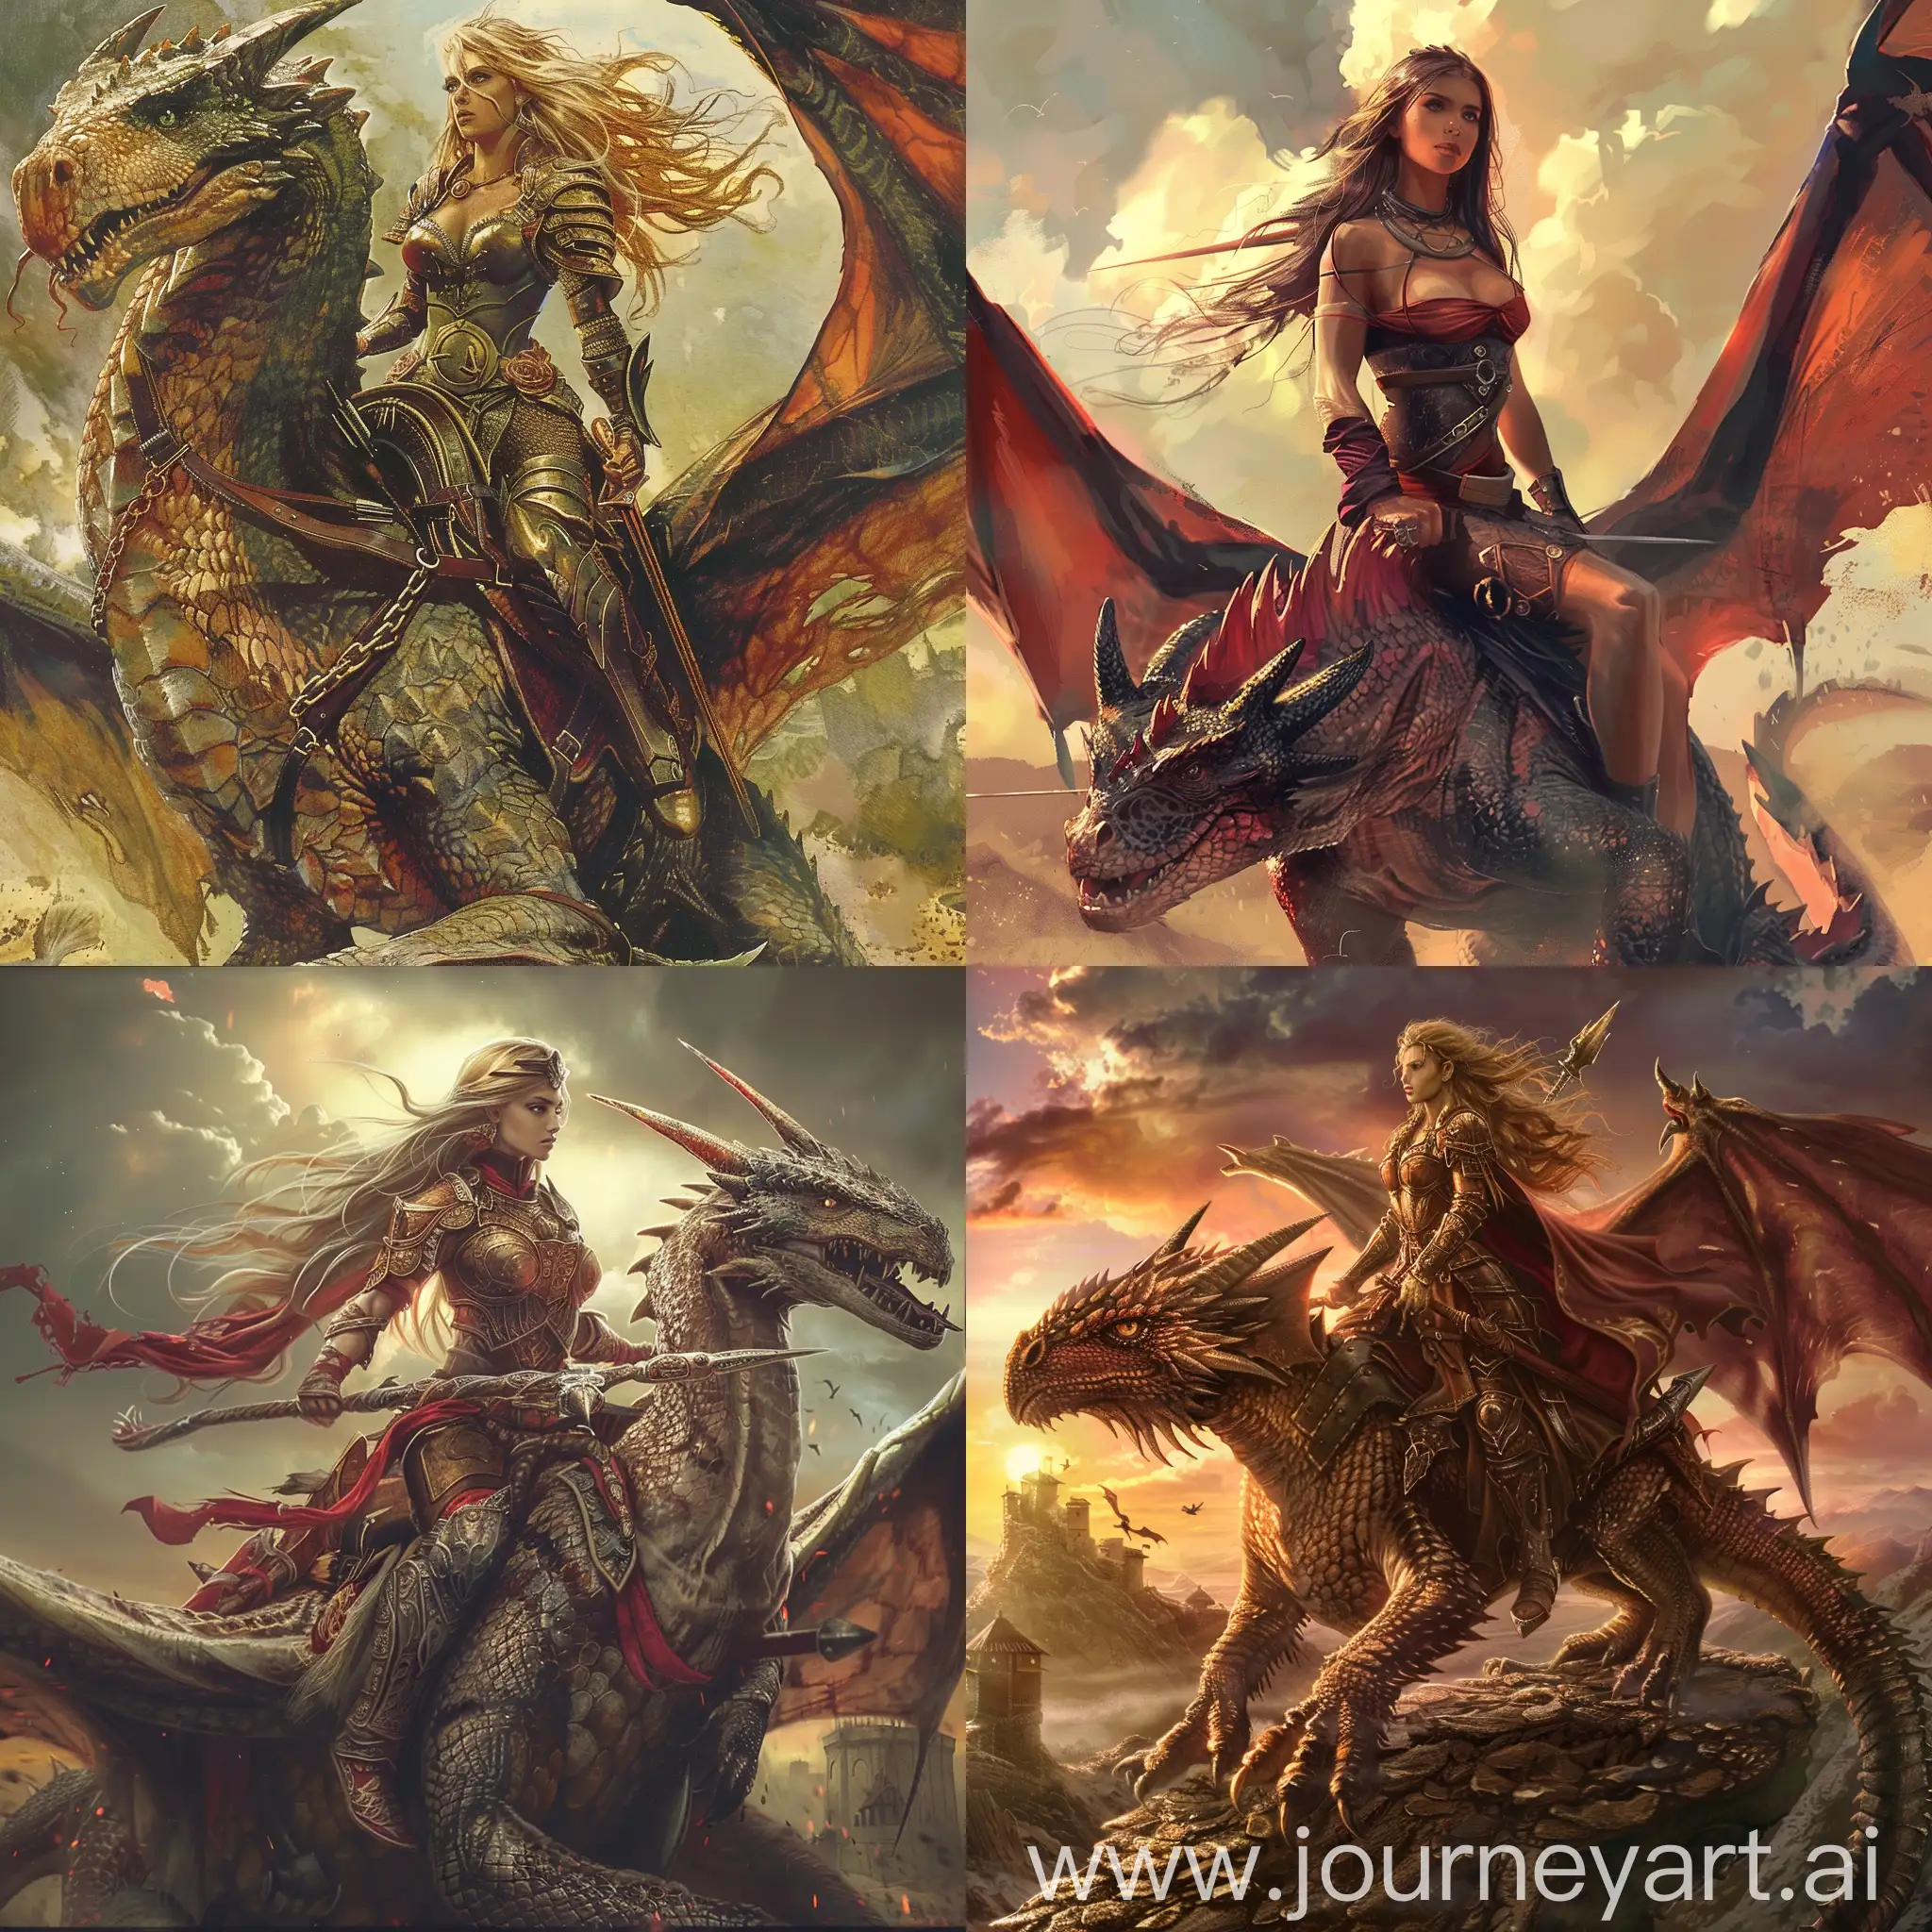 Warrior maiden riding dragon